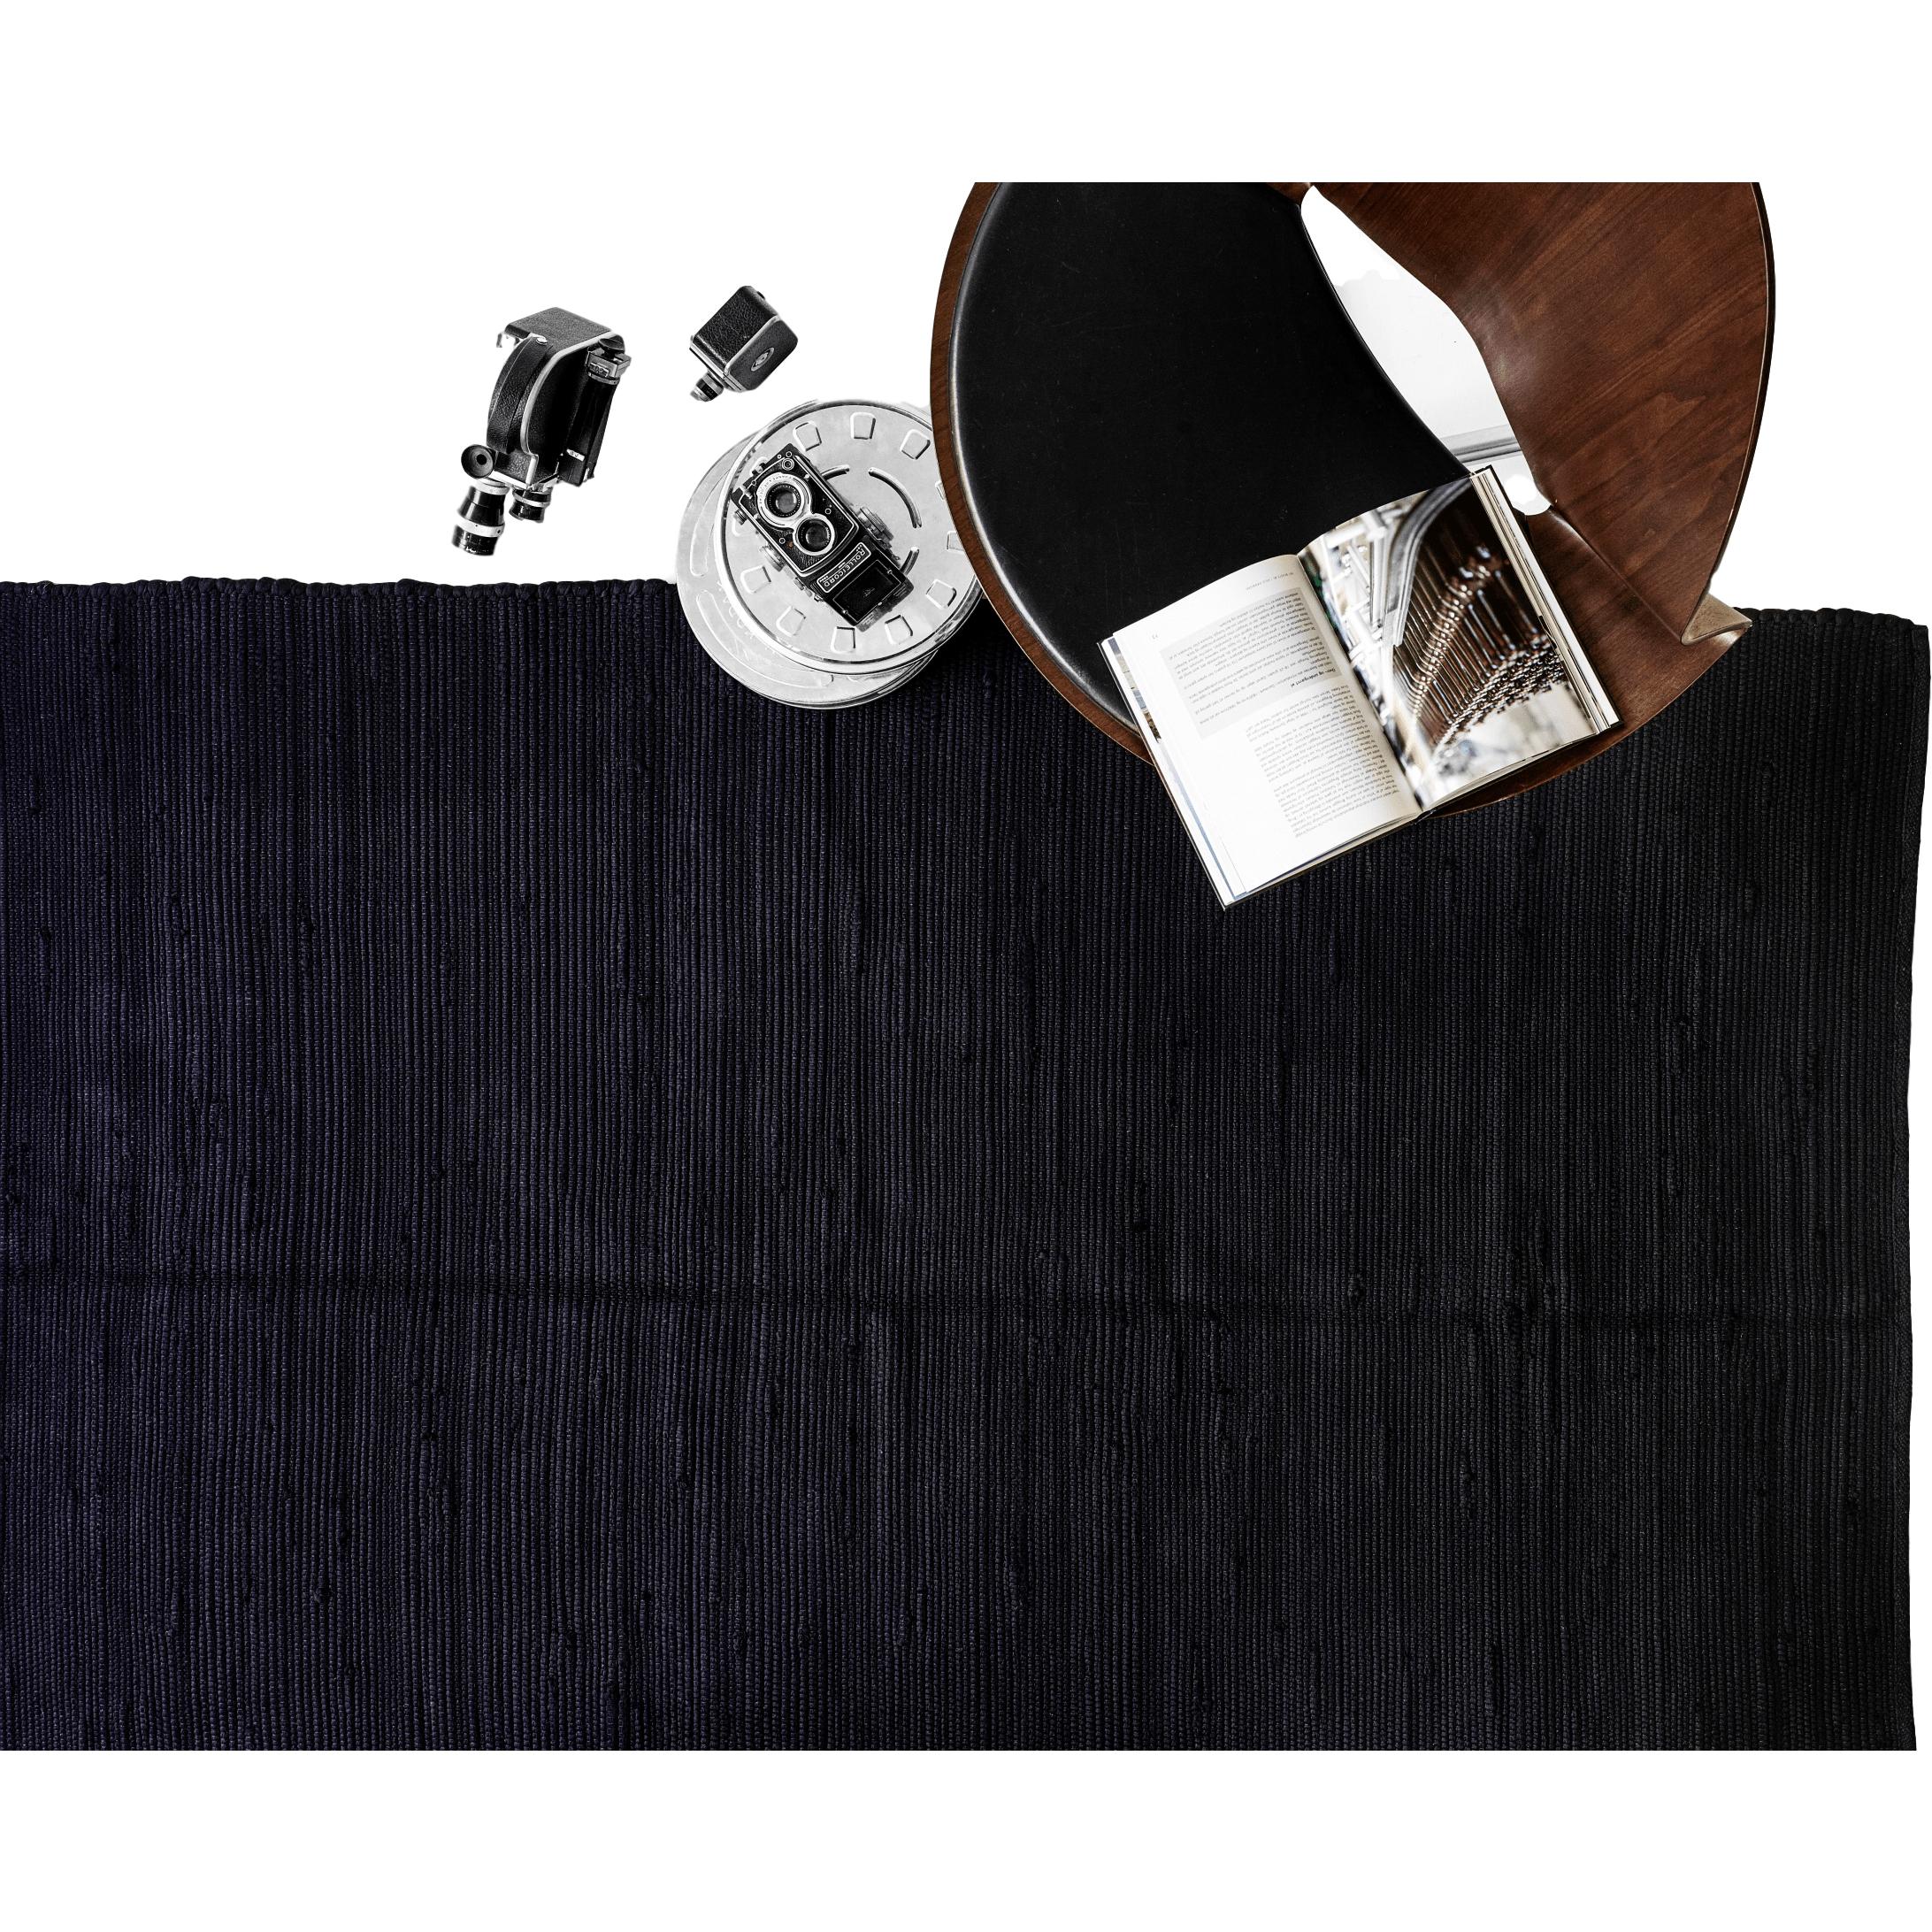 Koberec pevný bavlněný koberec černý, 170 x 240 cm